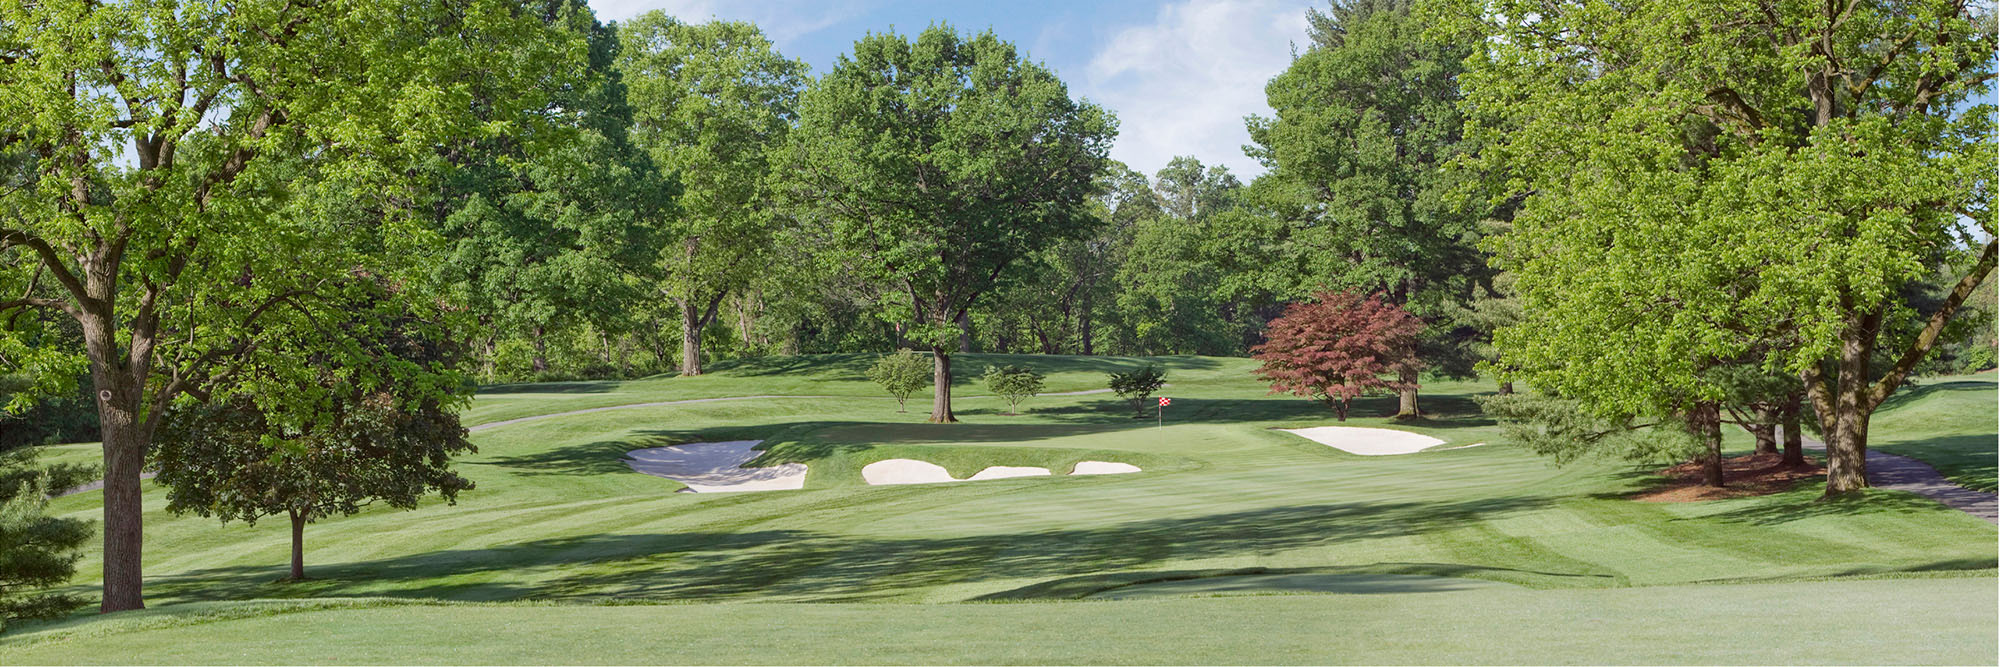 Golf Course Image - Lehigh Country Club No. 16